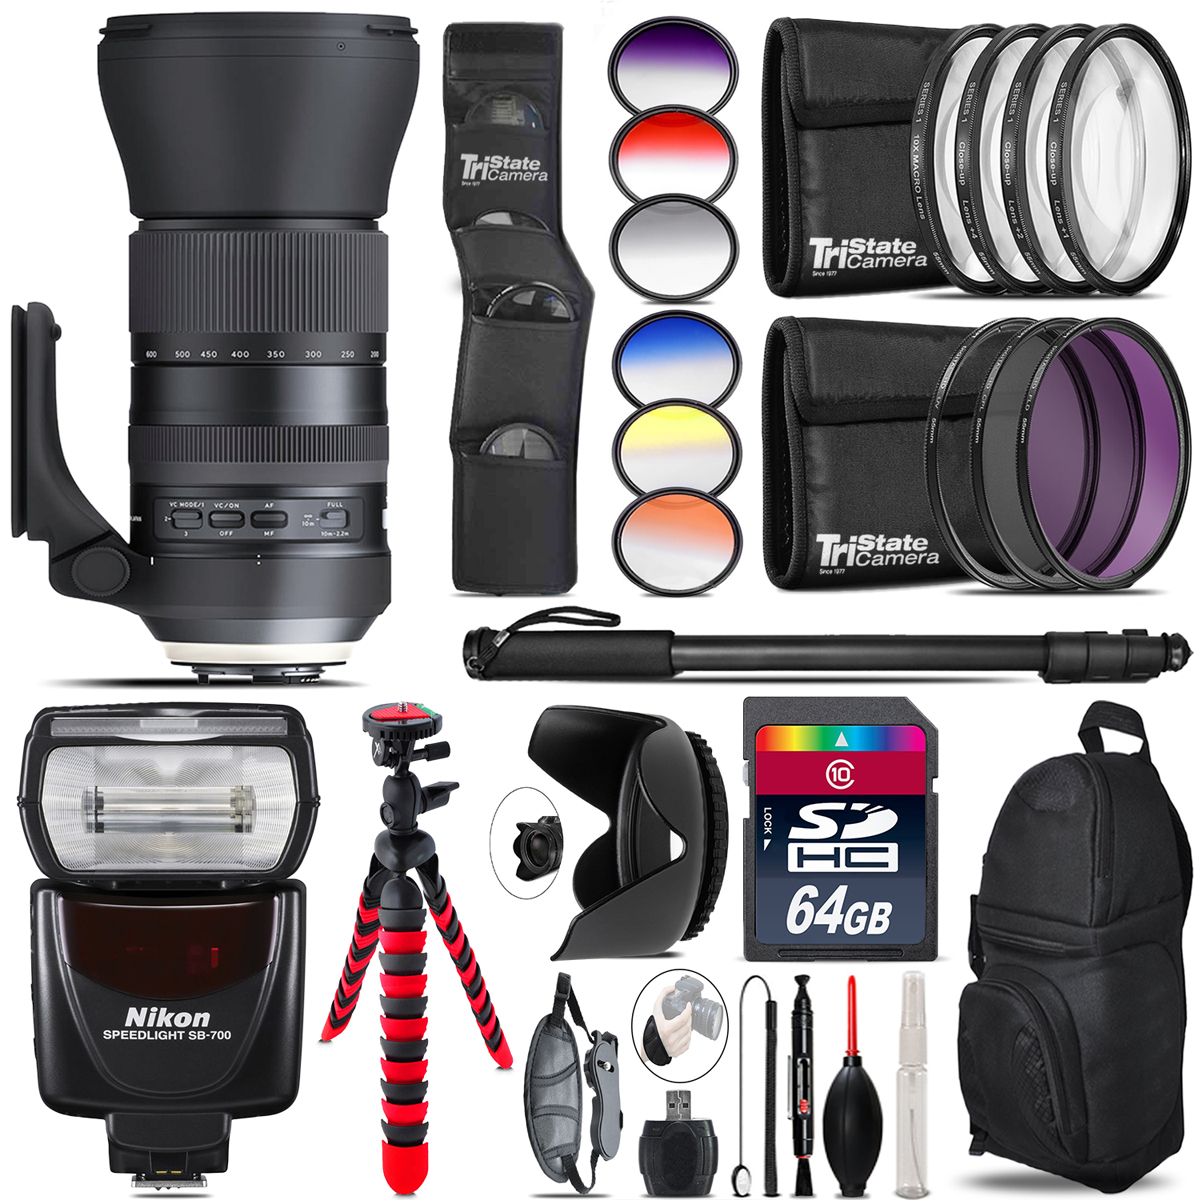 150-600mm G2 for Nikon + SB-700 AF Speedlight - 64GB Accessory Kit *FREE SHIPPING*